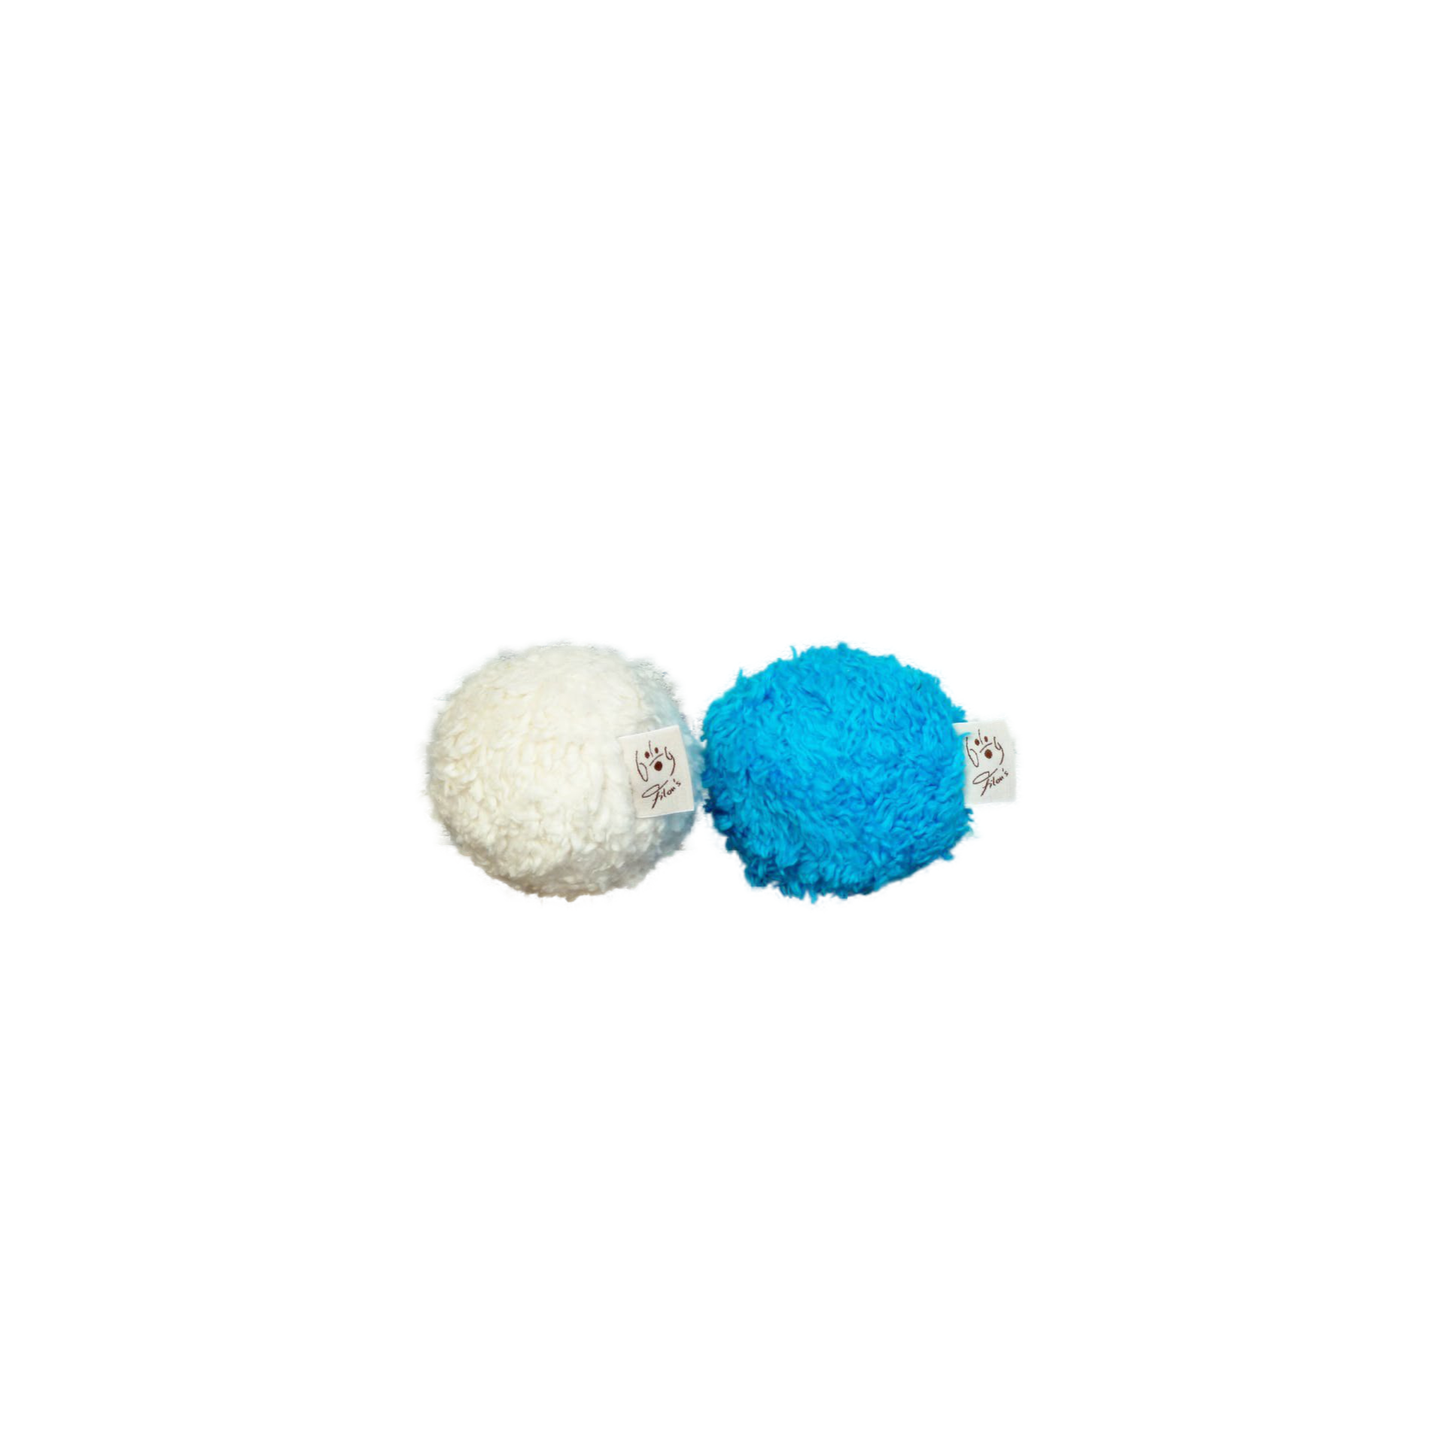 Game ball made of 100% cotton plush